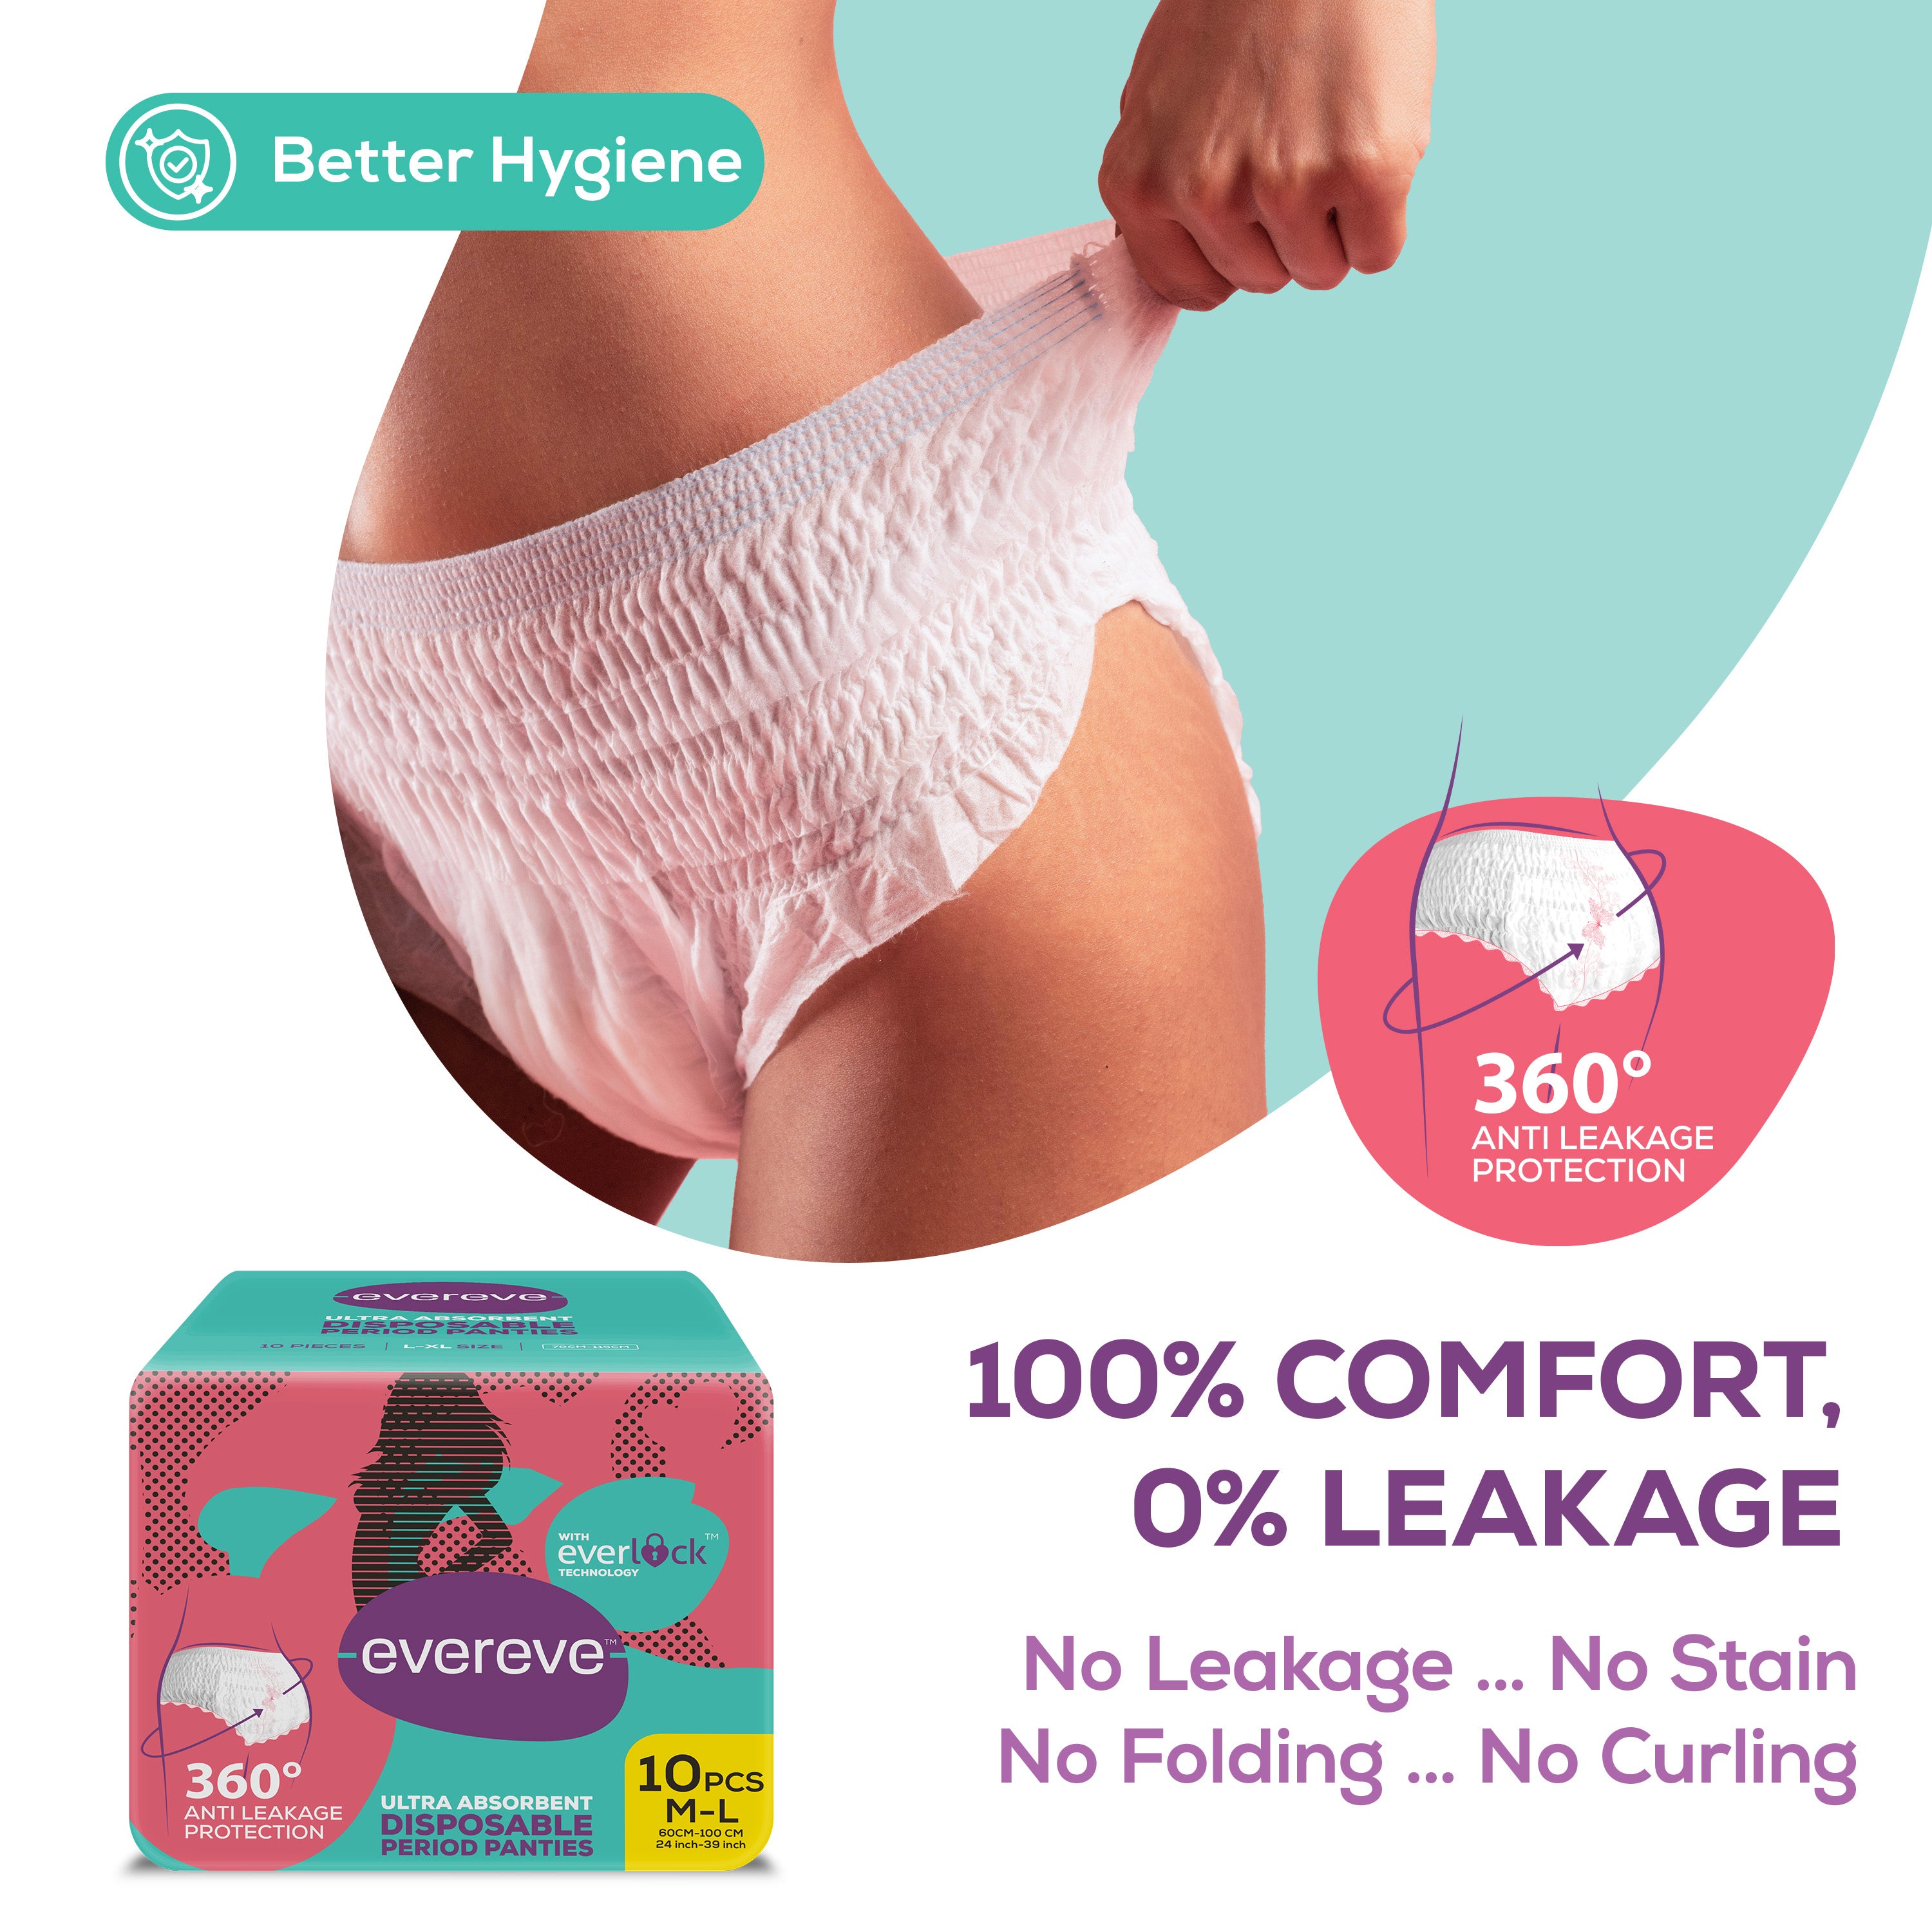 High absorbency disposable menstrual period pants| Alibaba.com